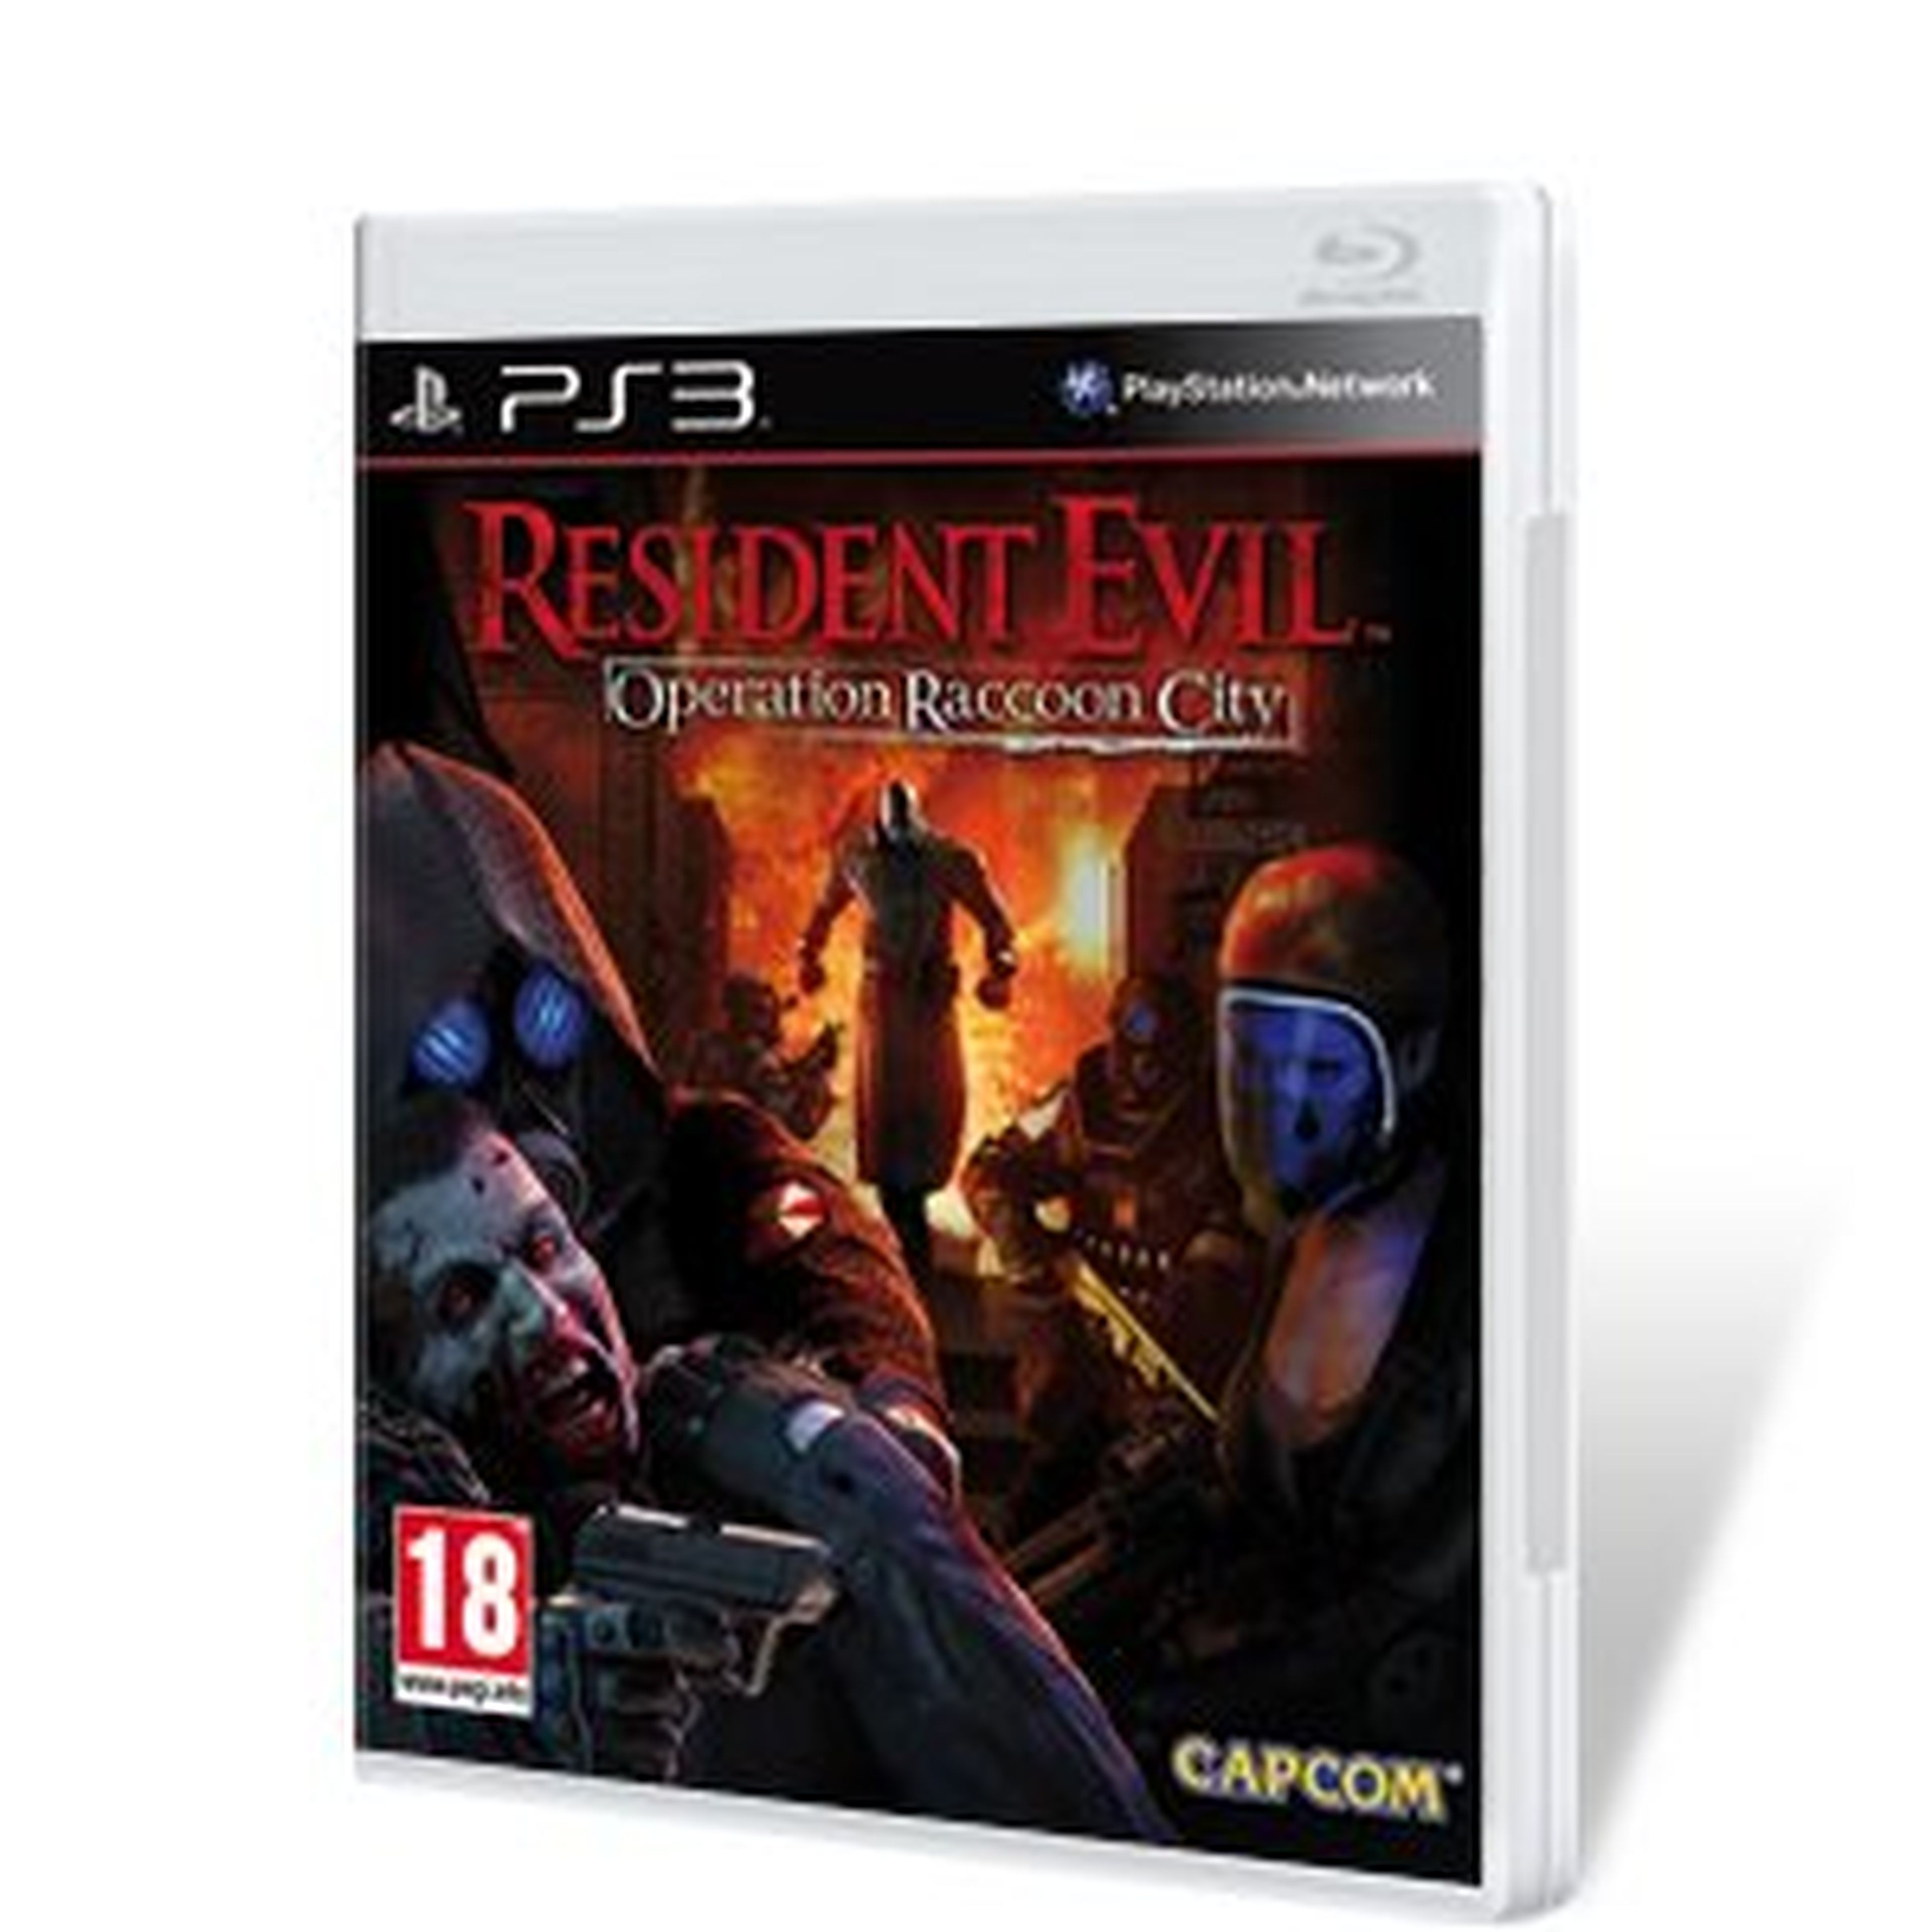 Resident Evil Op. Raccoon City para PS3